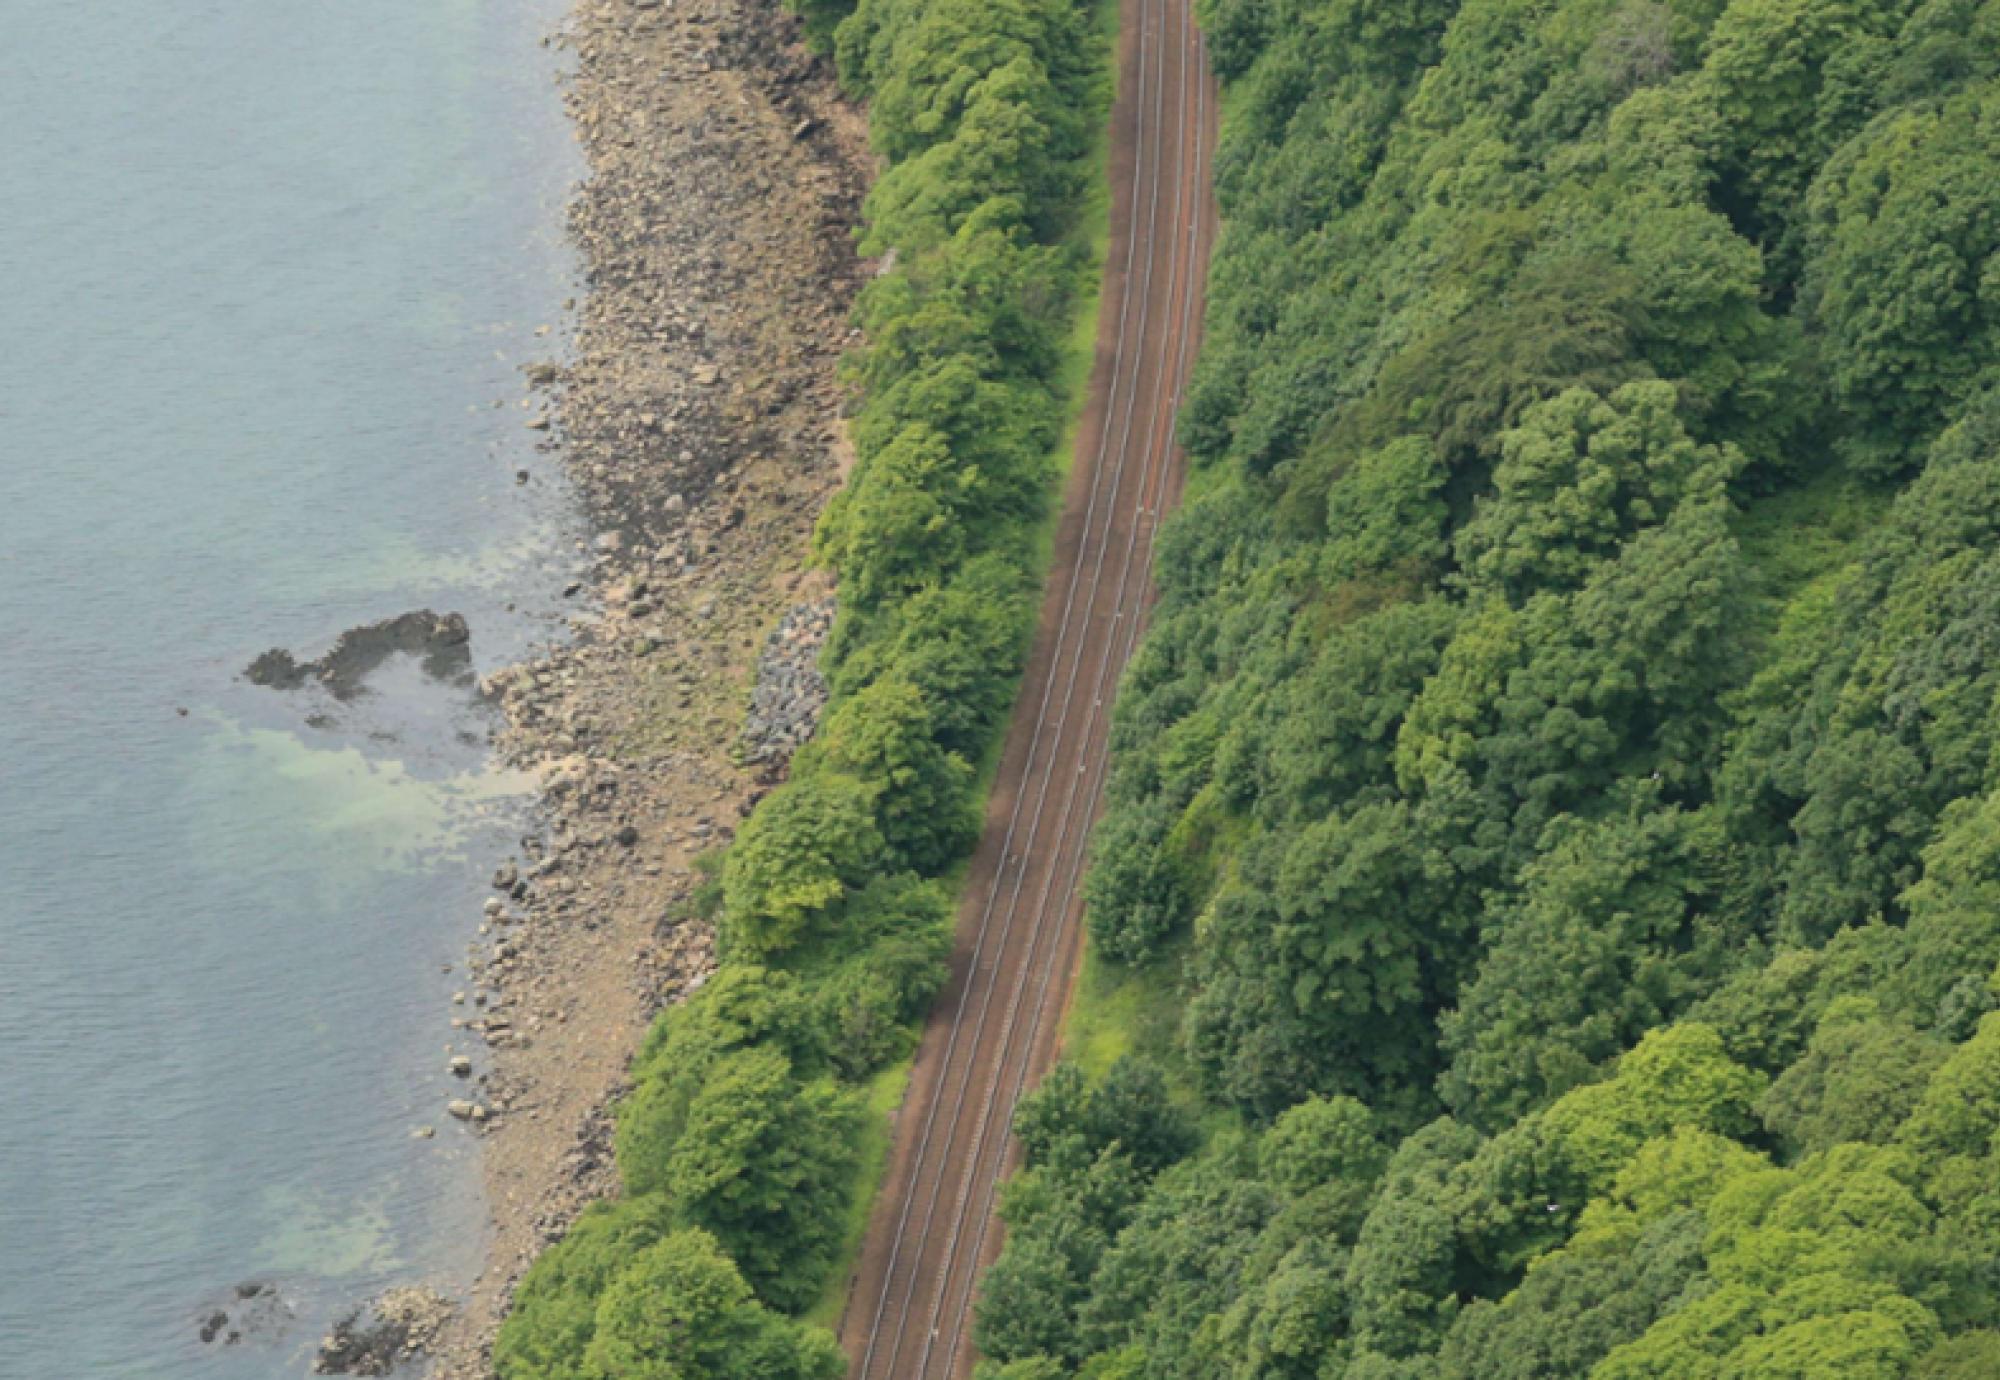 Aberdour Kirkcaldy vegetation, via Network Rail 